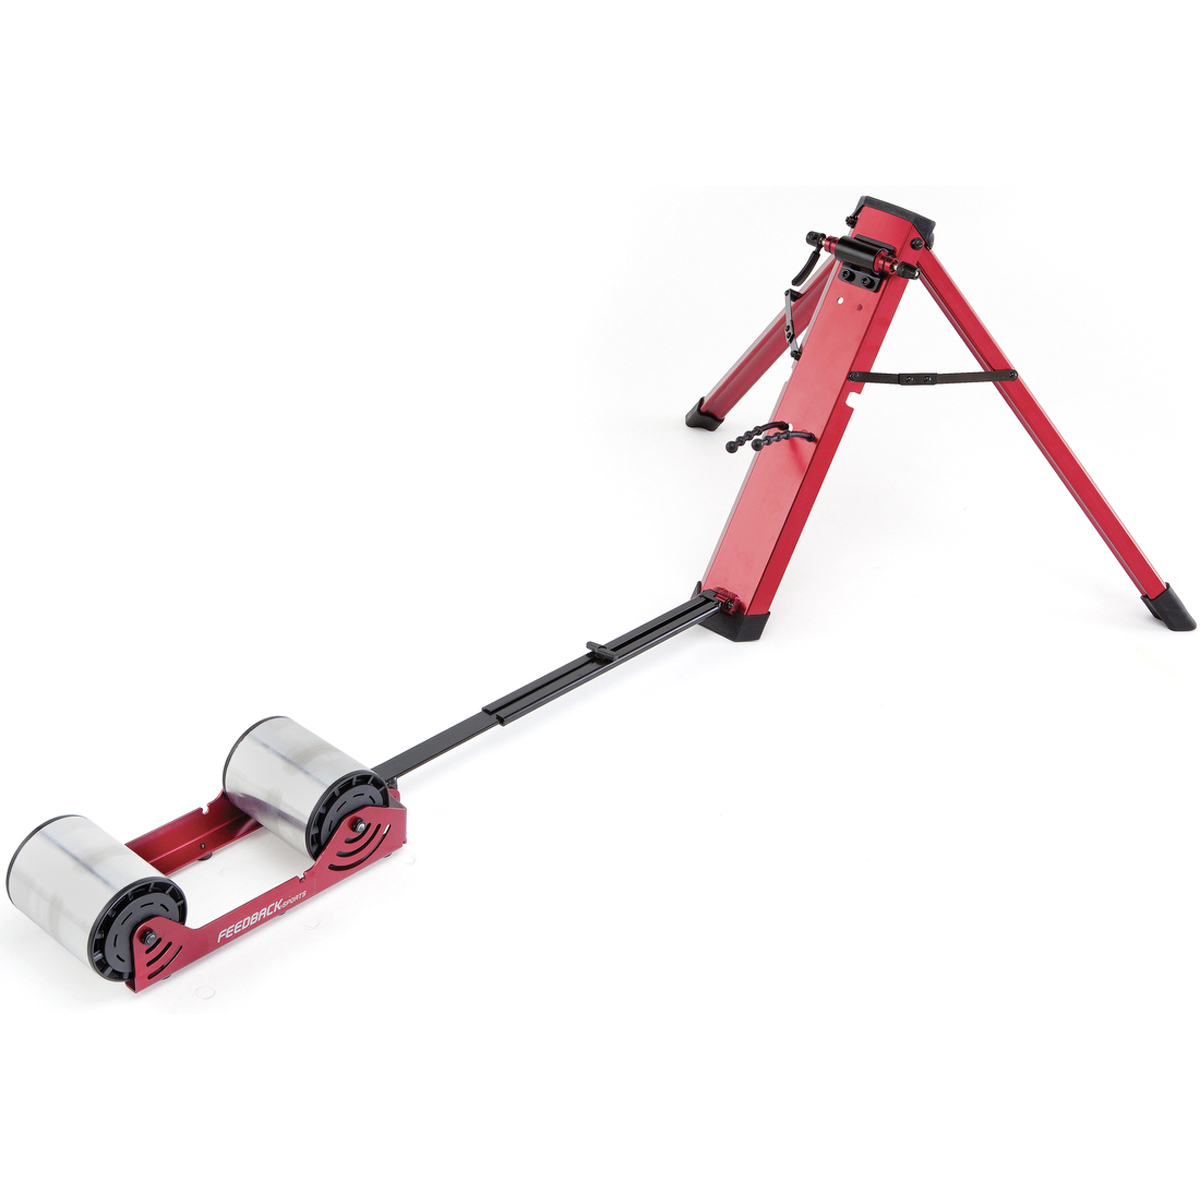 Productfoto van Feedback Sports Omnium - Over-Drive Bike Roller - red